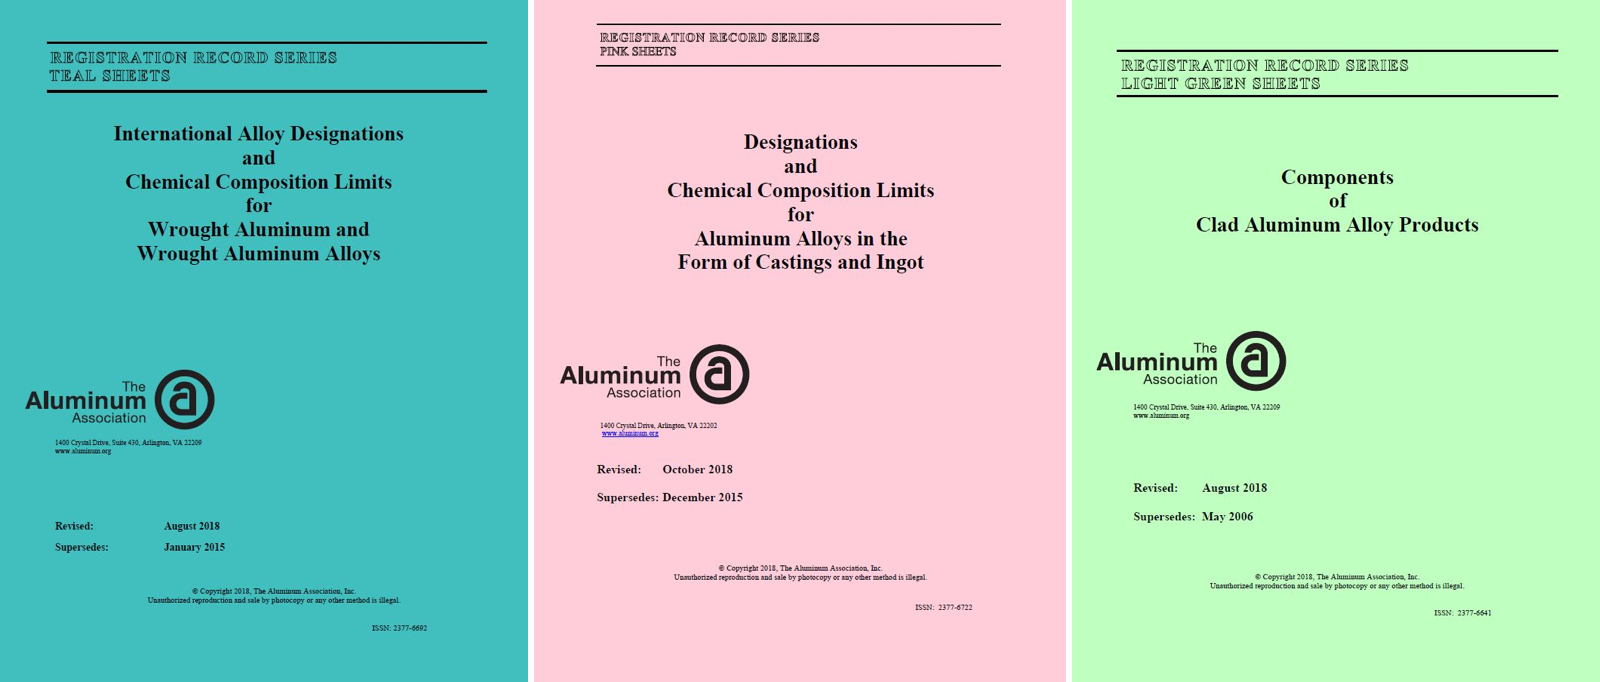 Aluminum Association Updates Registration Records – Teal, Pink and Light Green Sheets